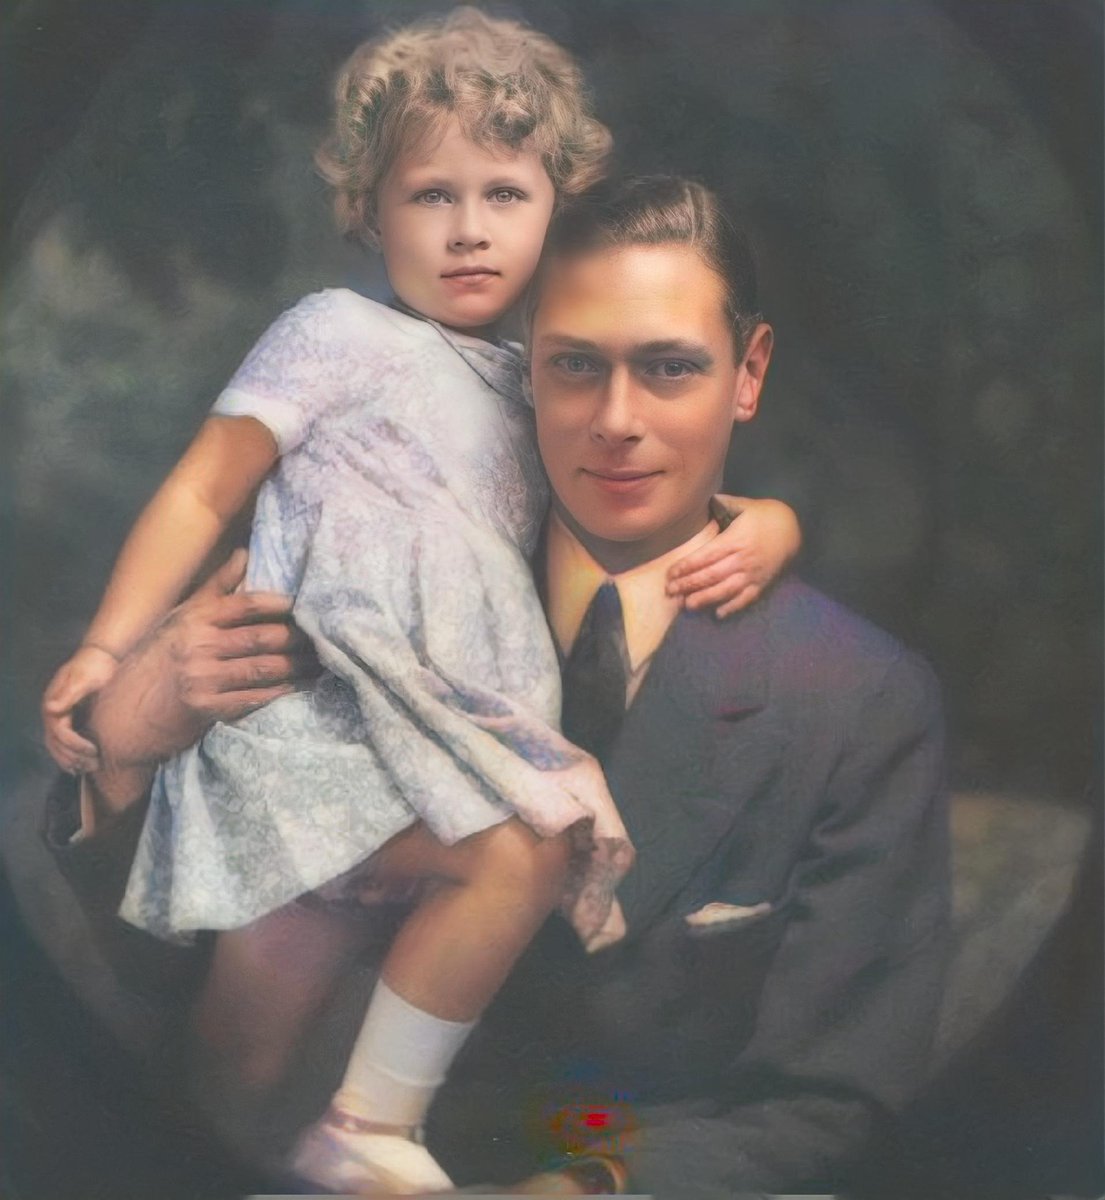 1930 King George VI and the then Princess Elizabeth #PlatinumJubilee #QueenElizabeth #RoyalFamily #KingGeorgeVI